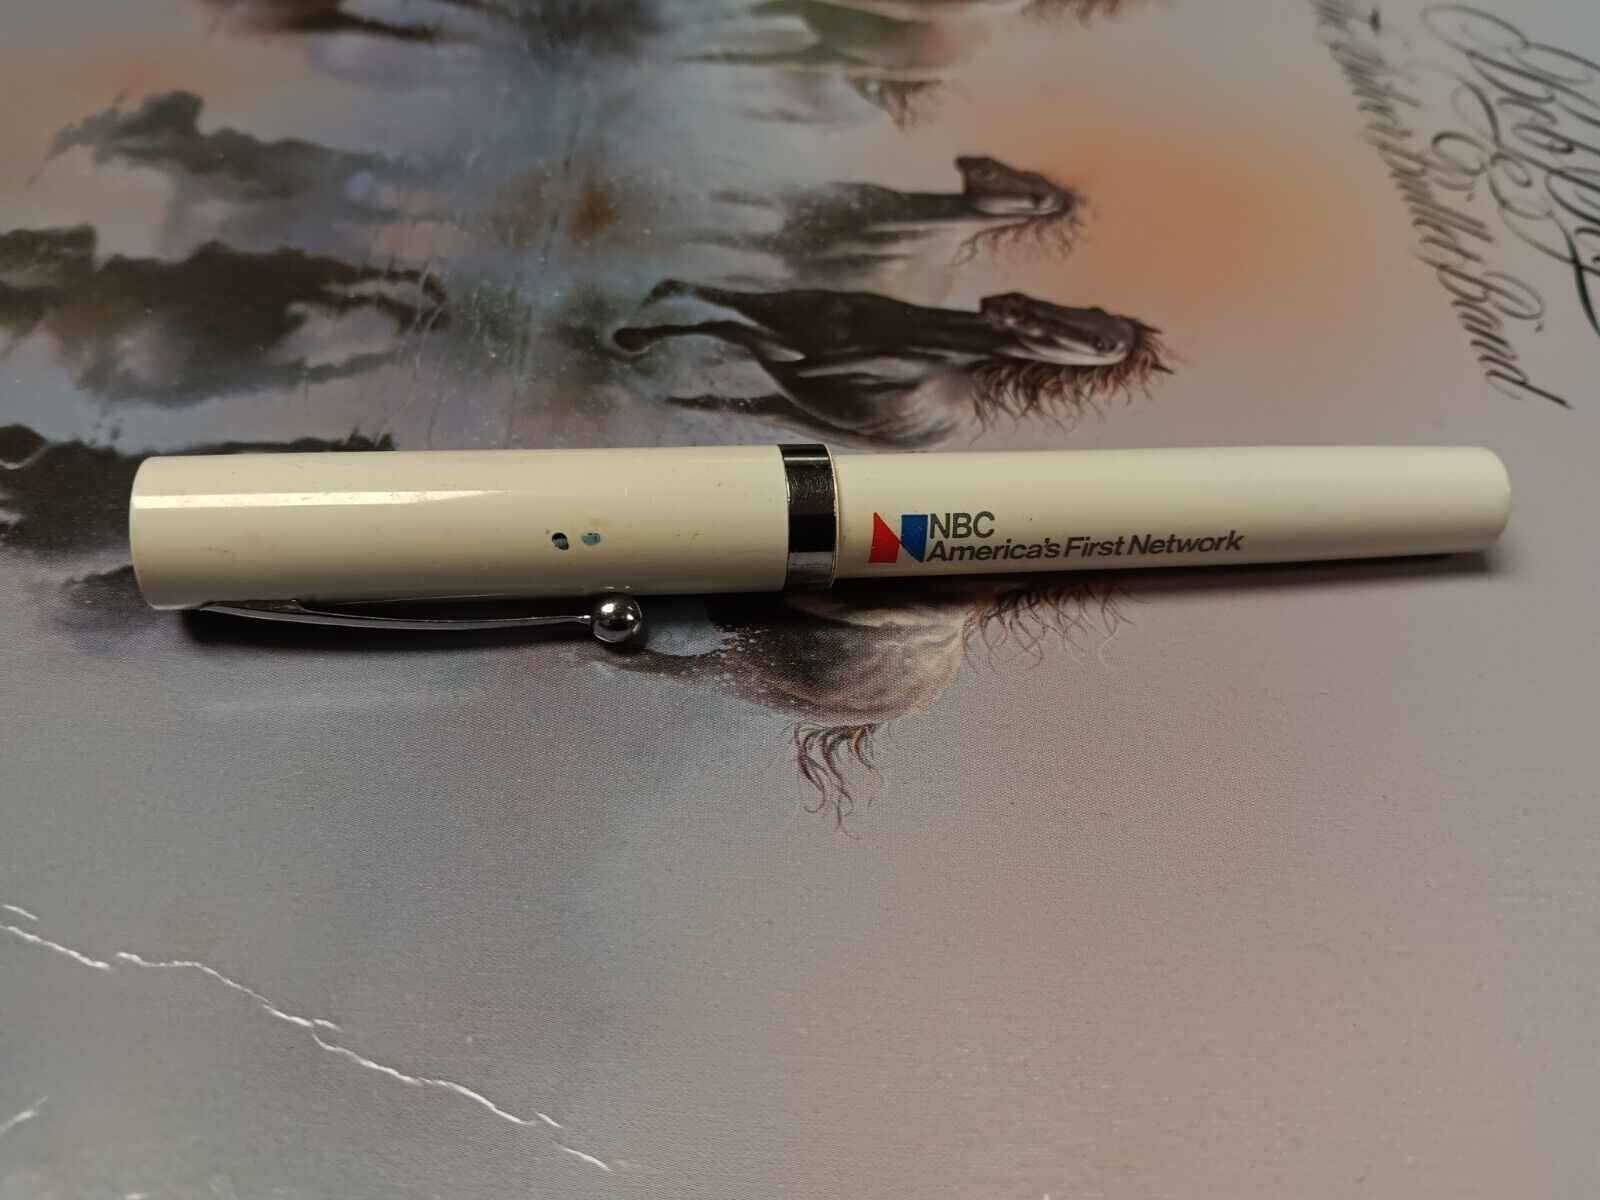 Sheaffer NBC America\'s First Network Pen, needs refill